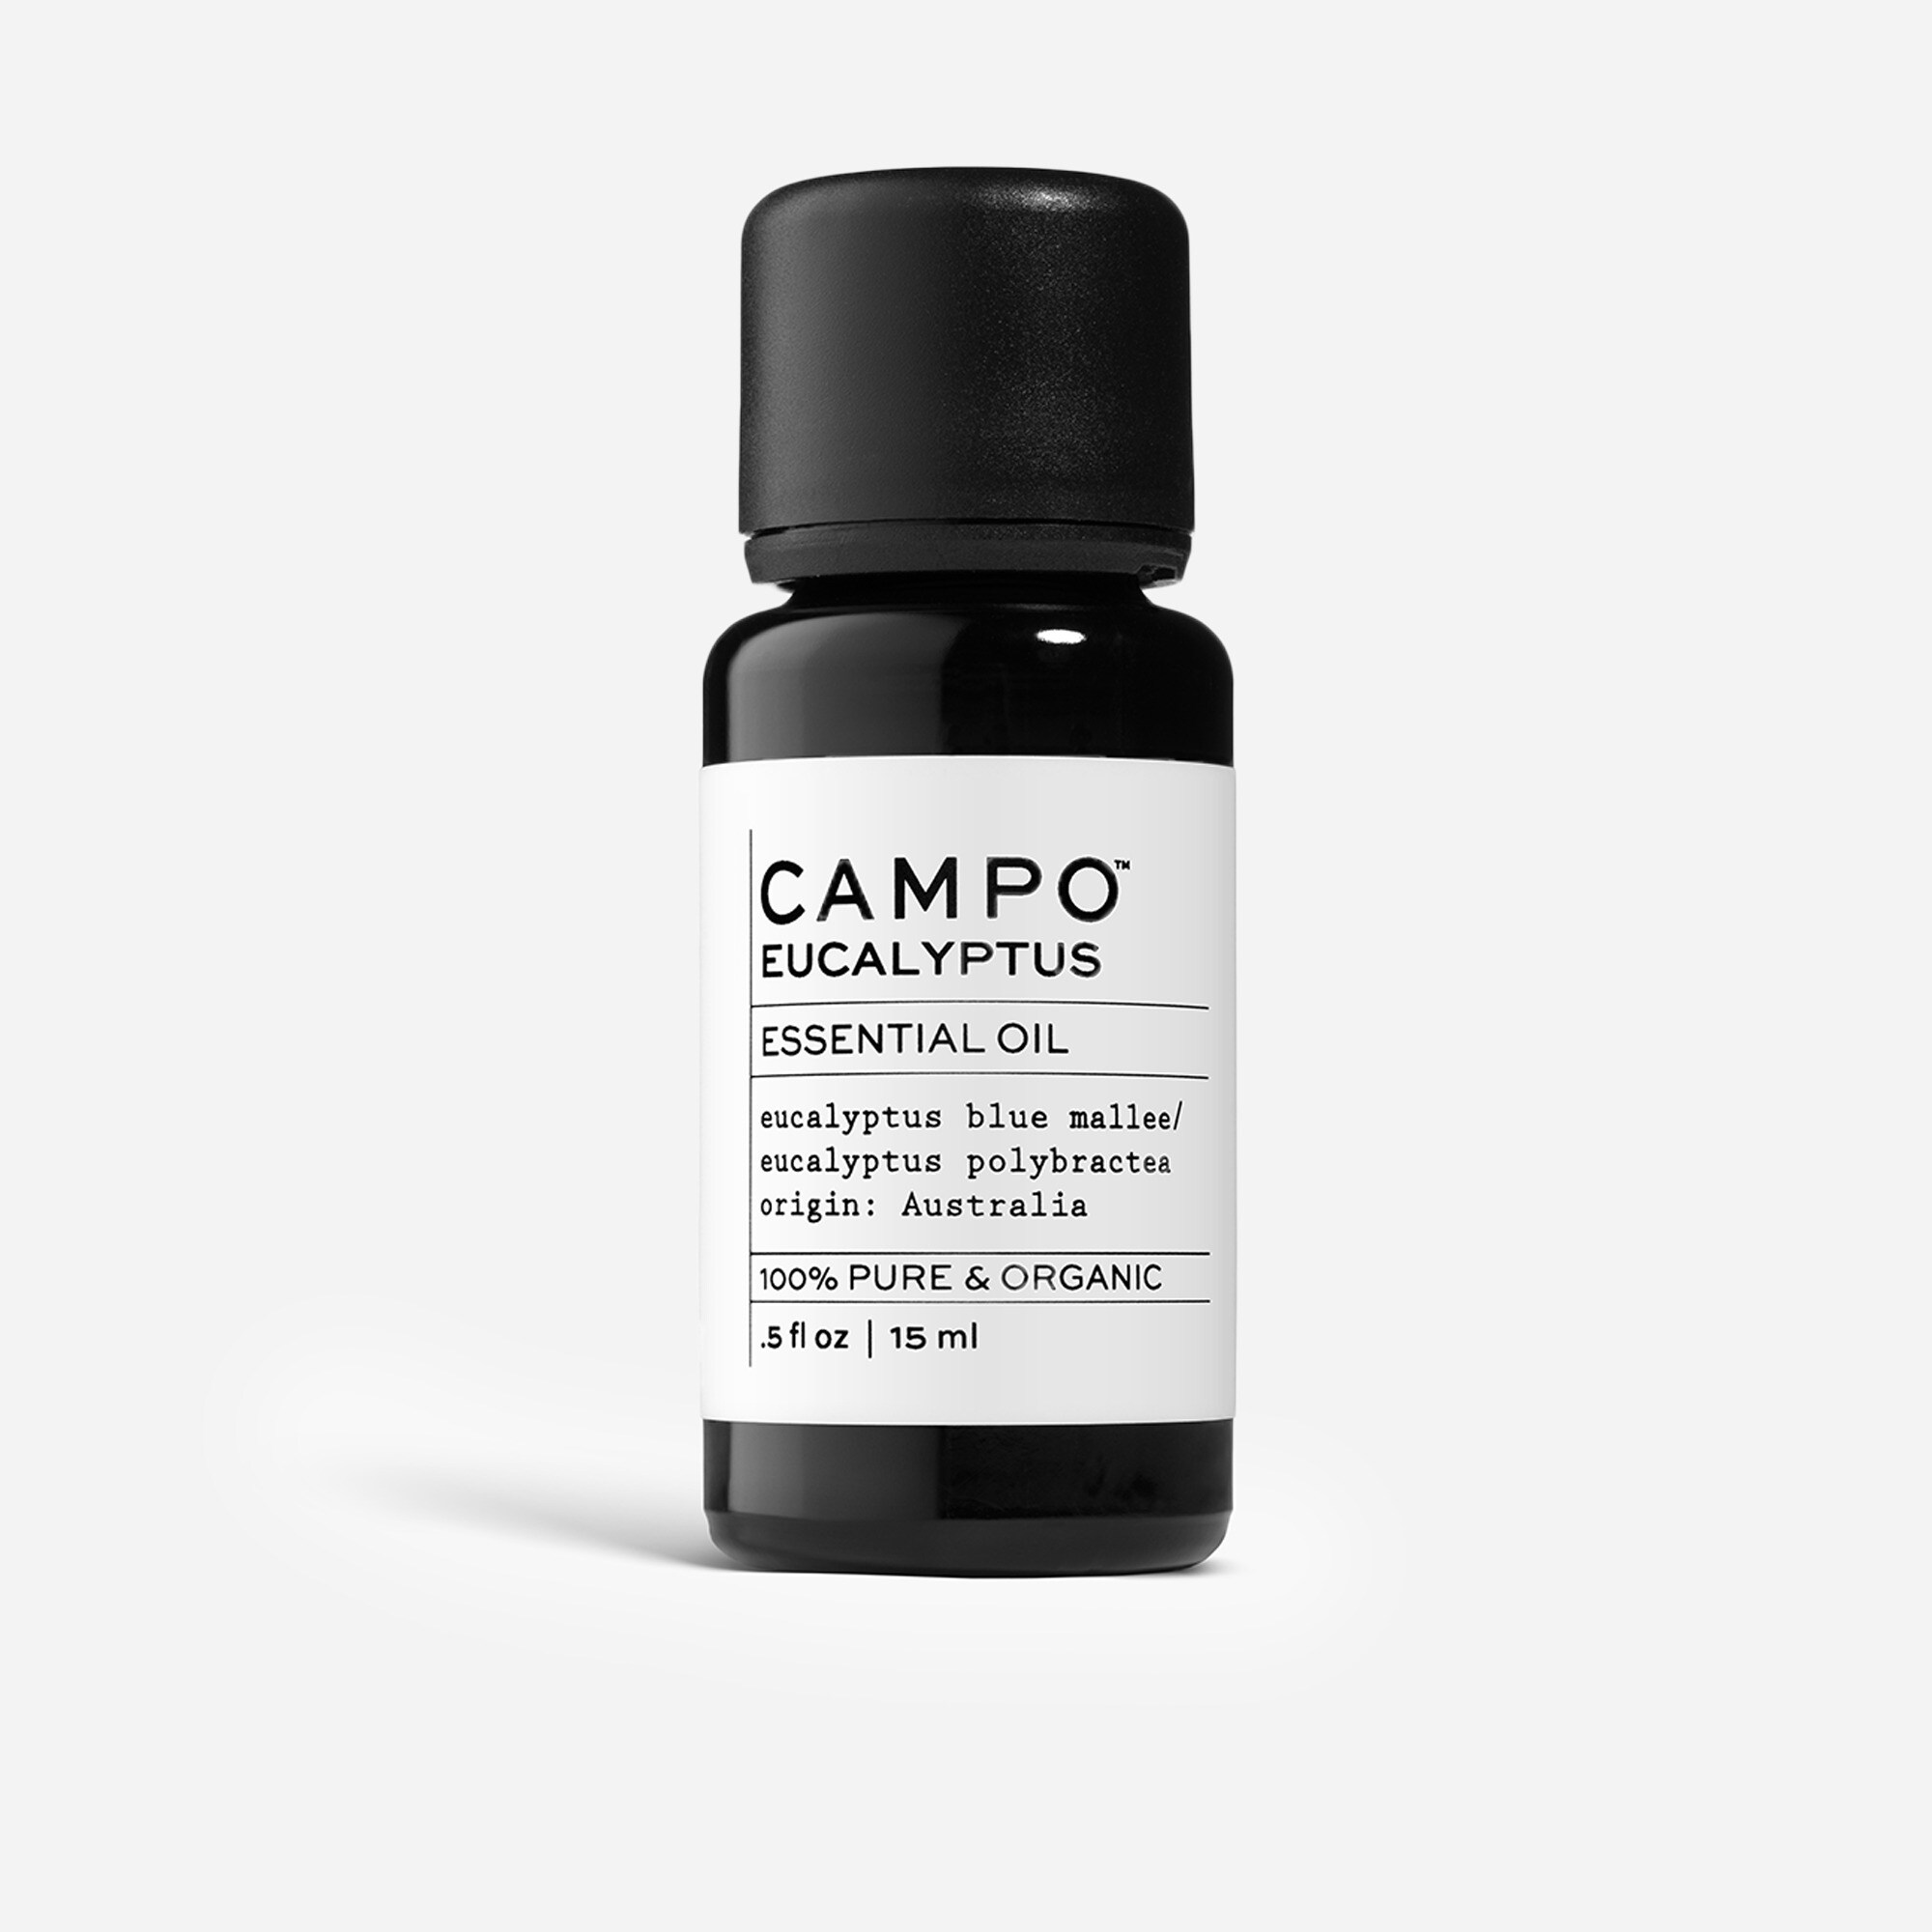  CAMPO® eucalyptus pure essential oil single note